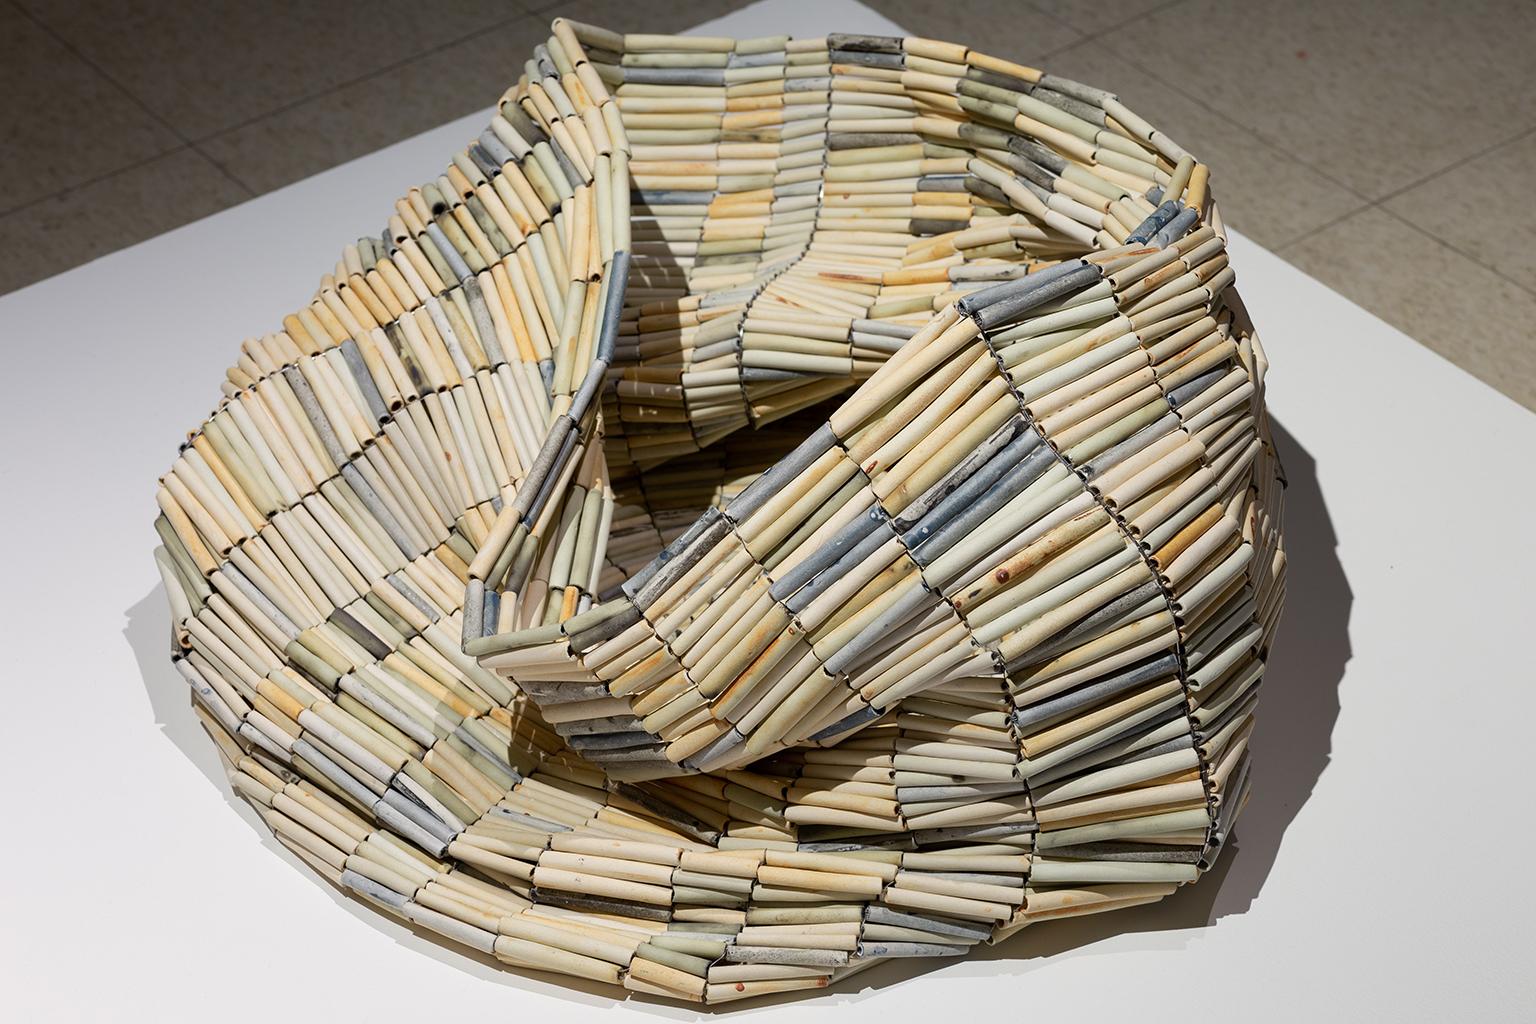 Untitled (Tobacco Barrel) - Sculpture by Nadia Myre